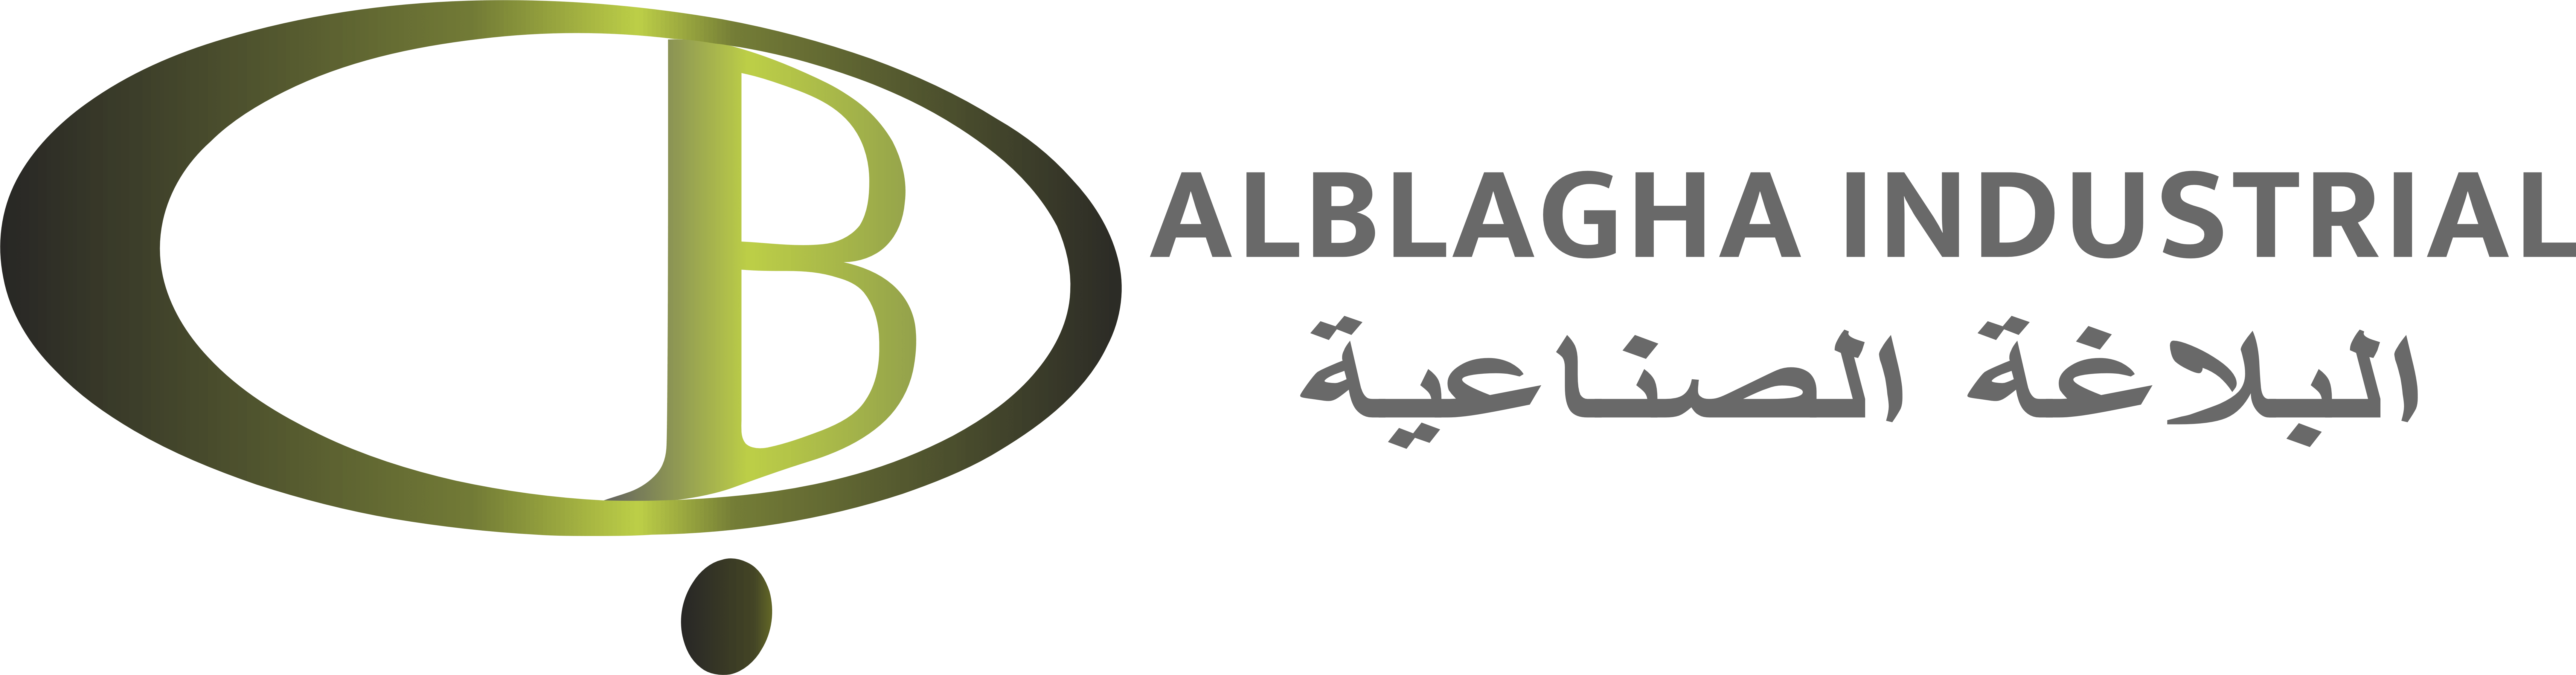 albaghalogo1